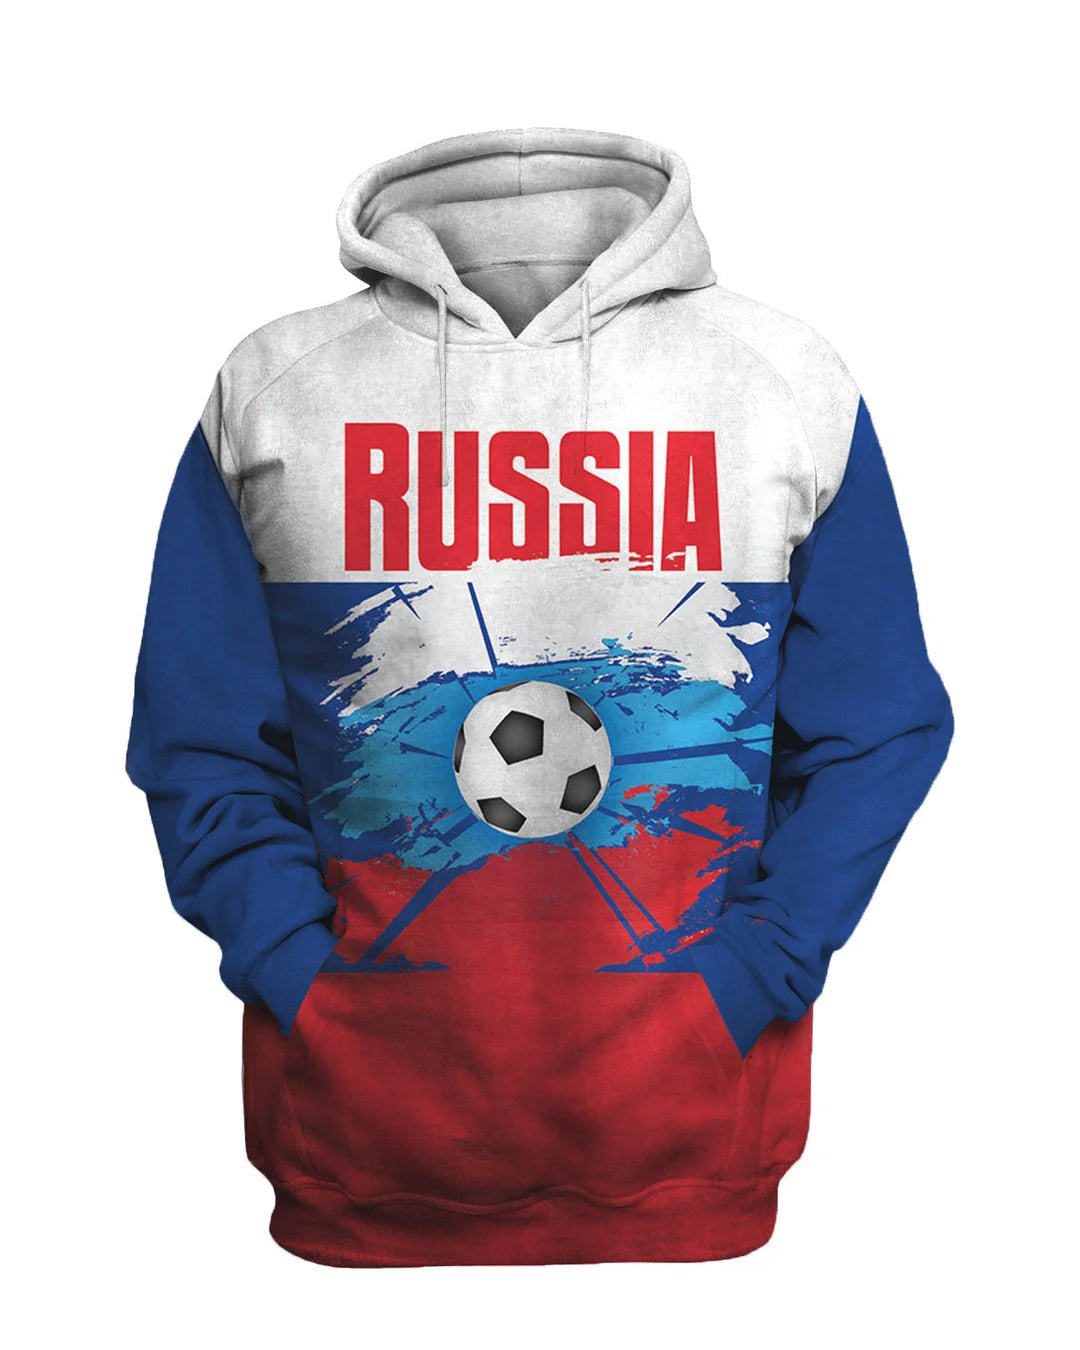 Russia National Football Team Printed Sweatshirt Set - DUVAL